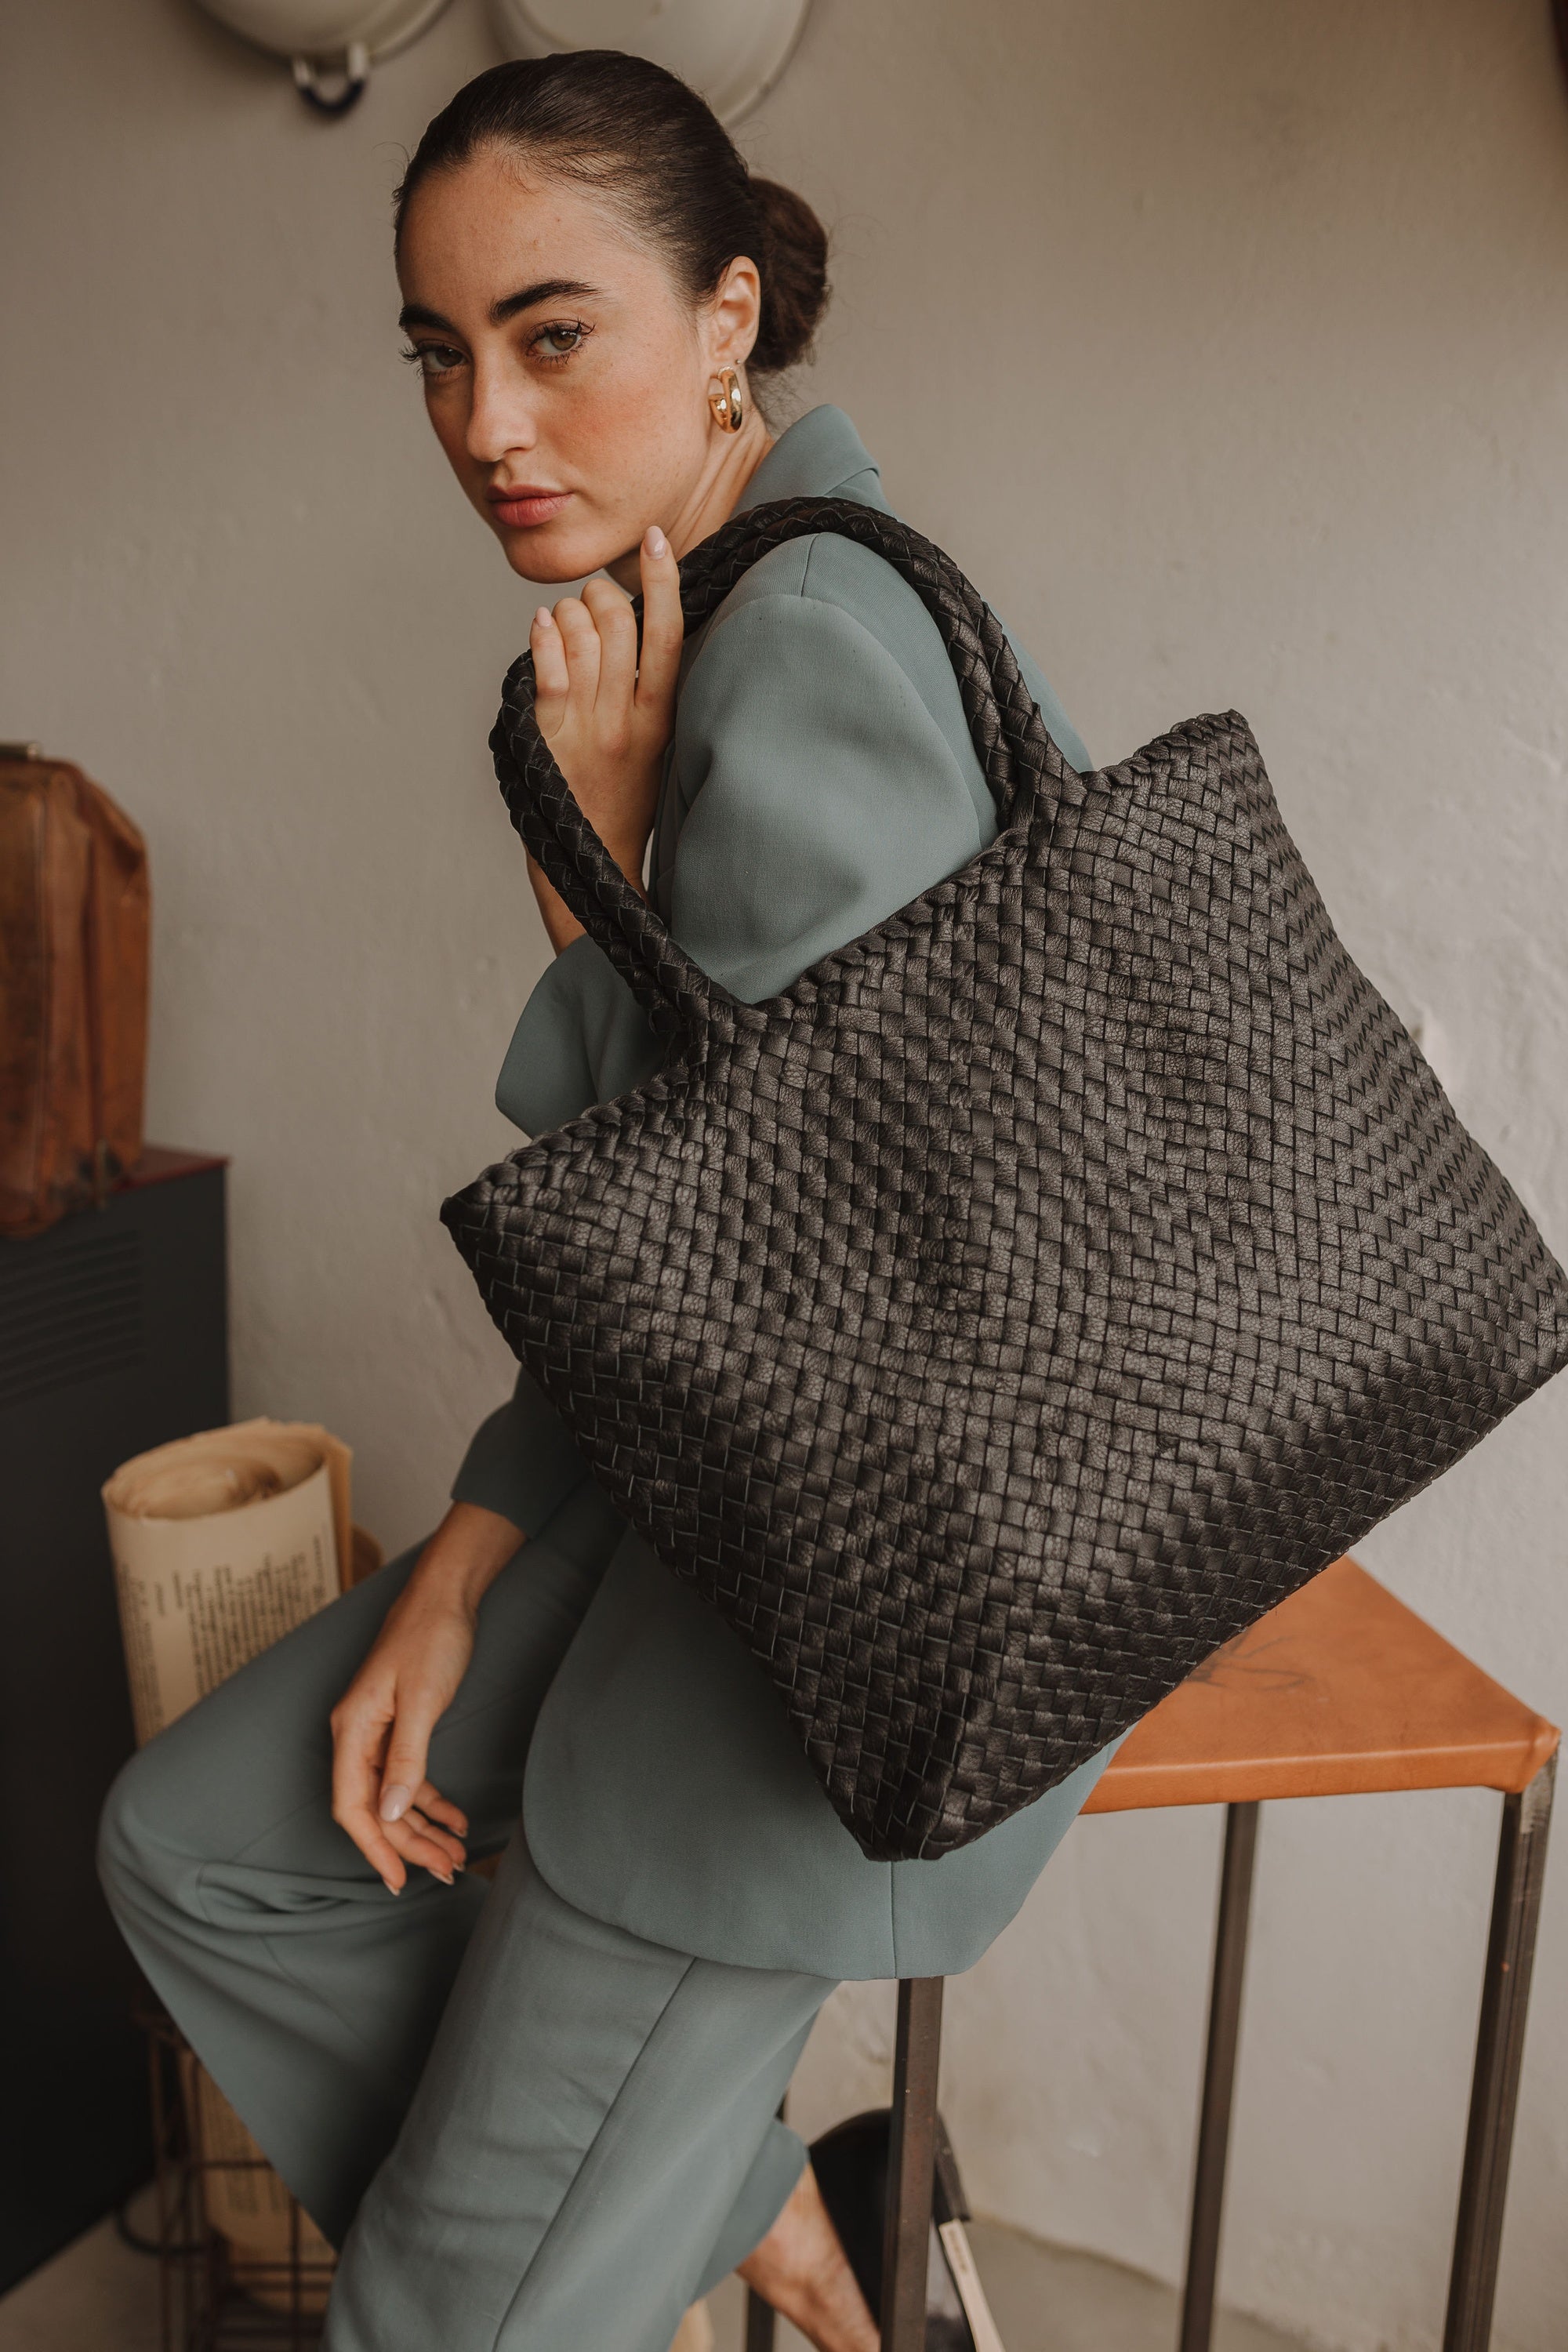 The Mini Woven Bag, Italian Woven Leather Purse - MILANER